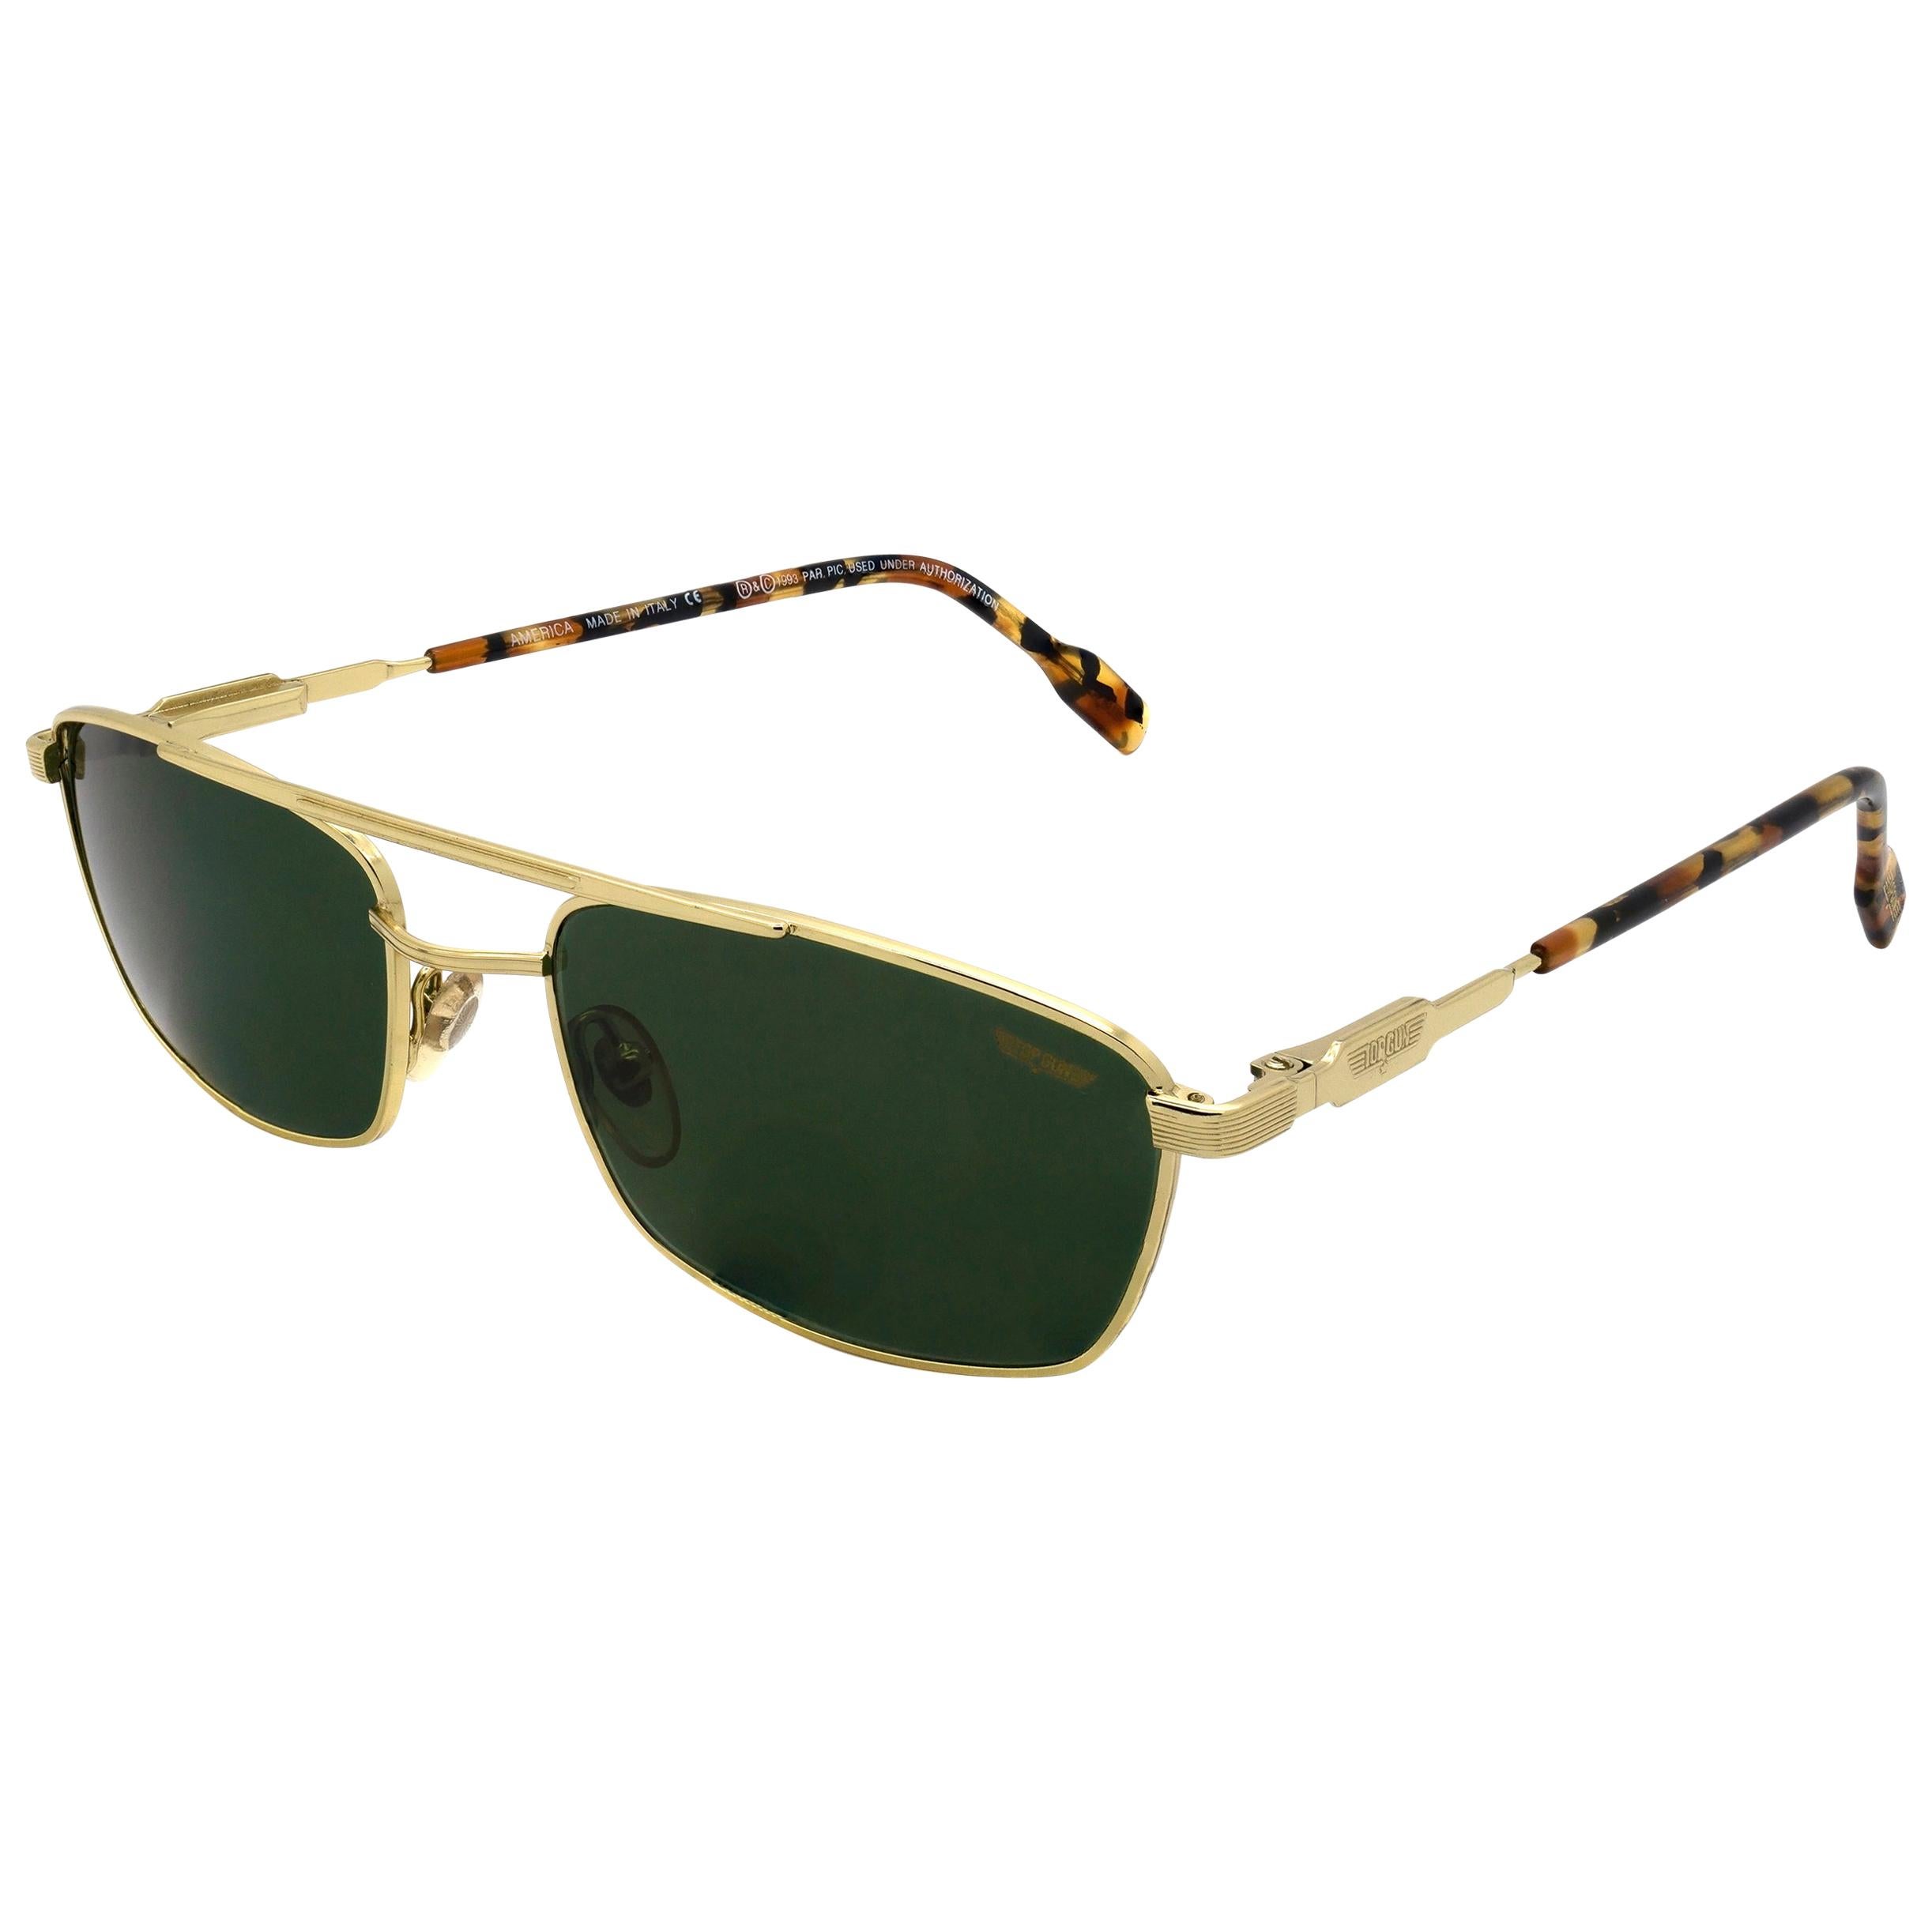 Top Gun aviator vintage sunglasses, Italy 90s